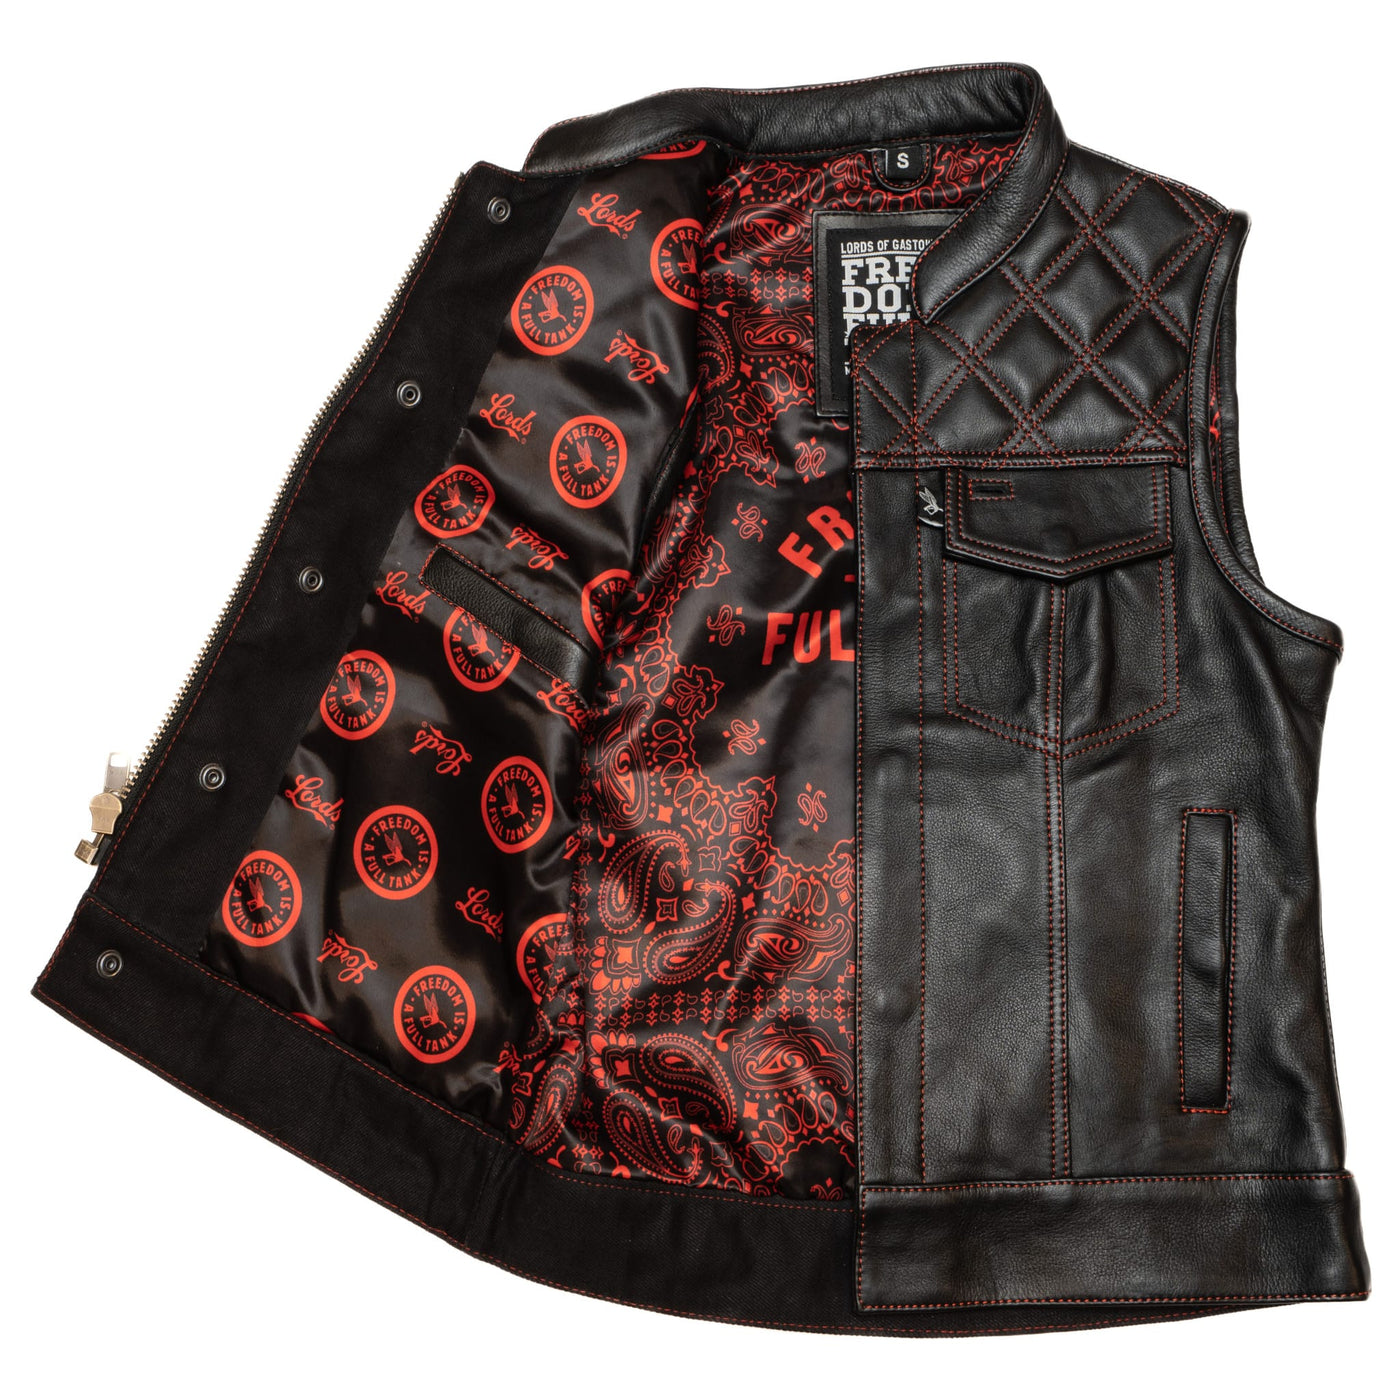 Women's Lords x Cleaver Culture Moto Vest - Black Leather